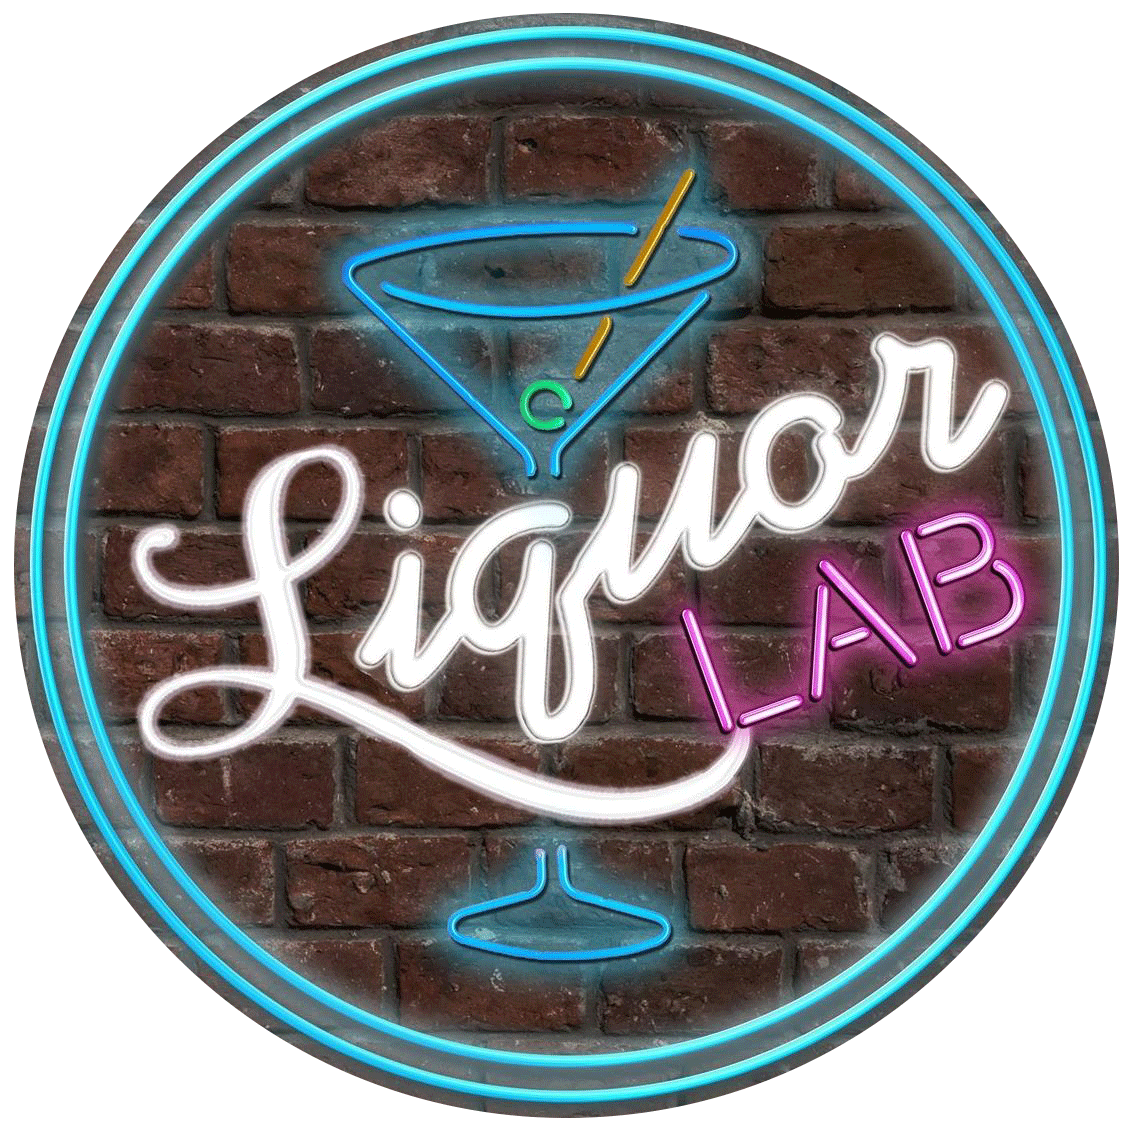 Liquor Lab | Leeds Based Cocktail Party & Event Service.